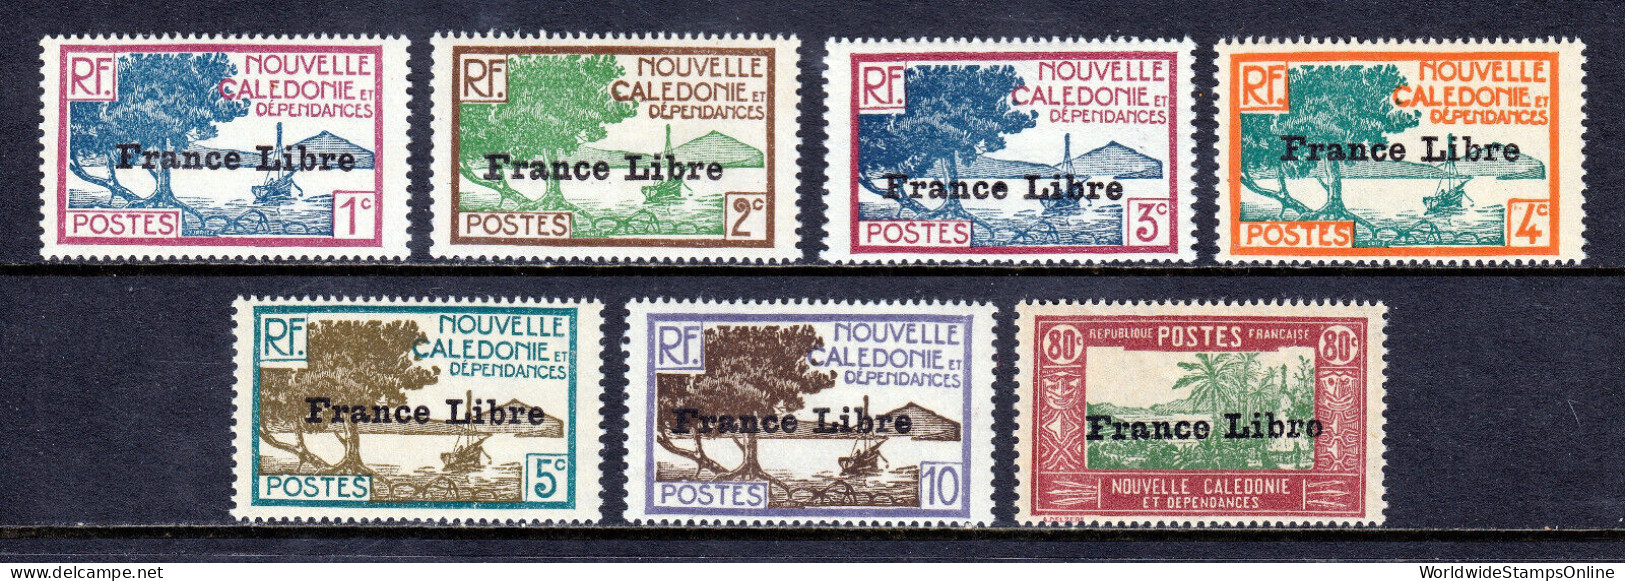 NEW CALEDONIA — SCOTT 217/236  — 1941 FRANCE LIBRE ISSUE — MH — SCV $99 - Nuovi